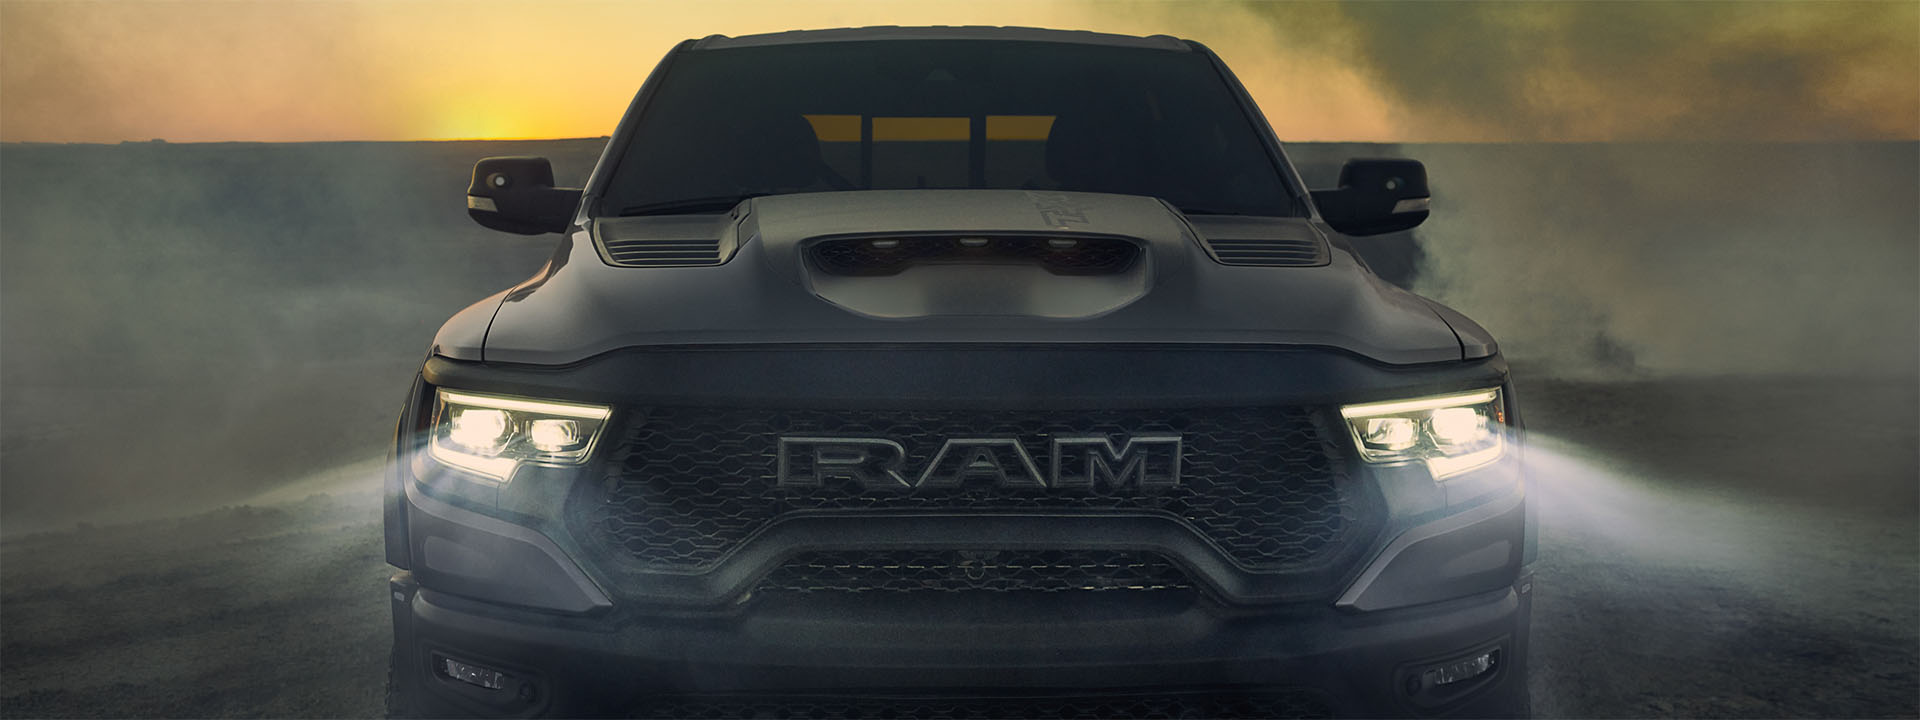 Ram 1500 TRX Image